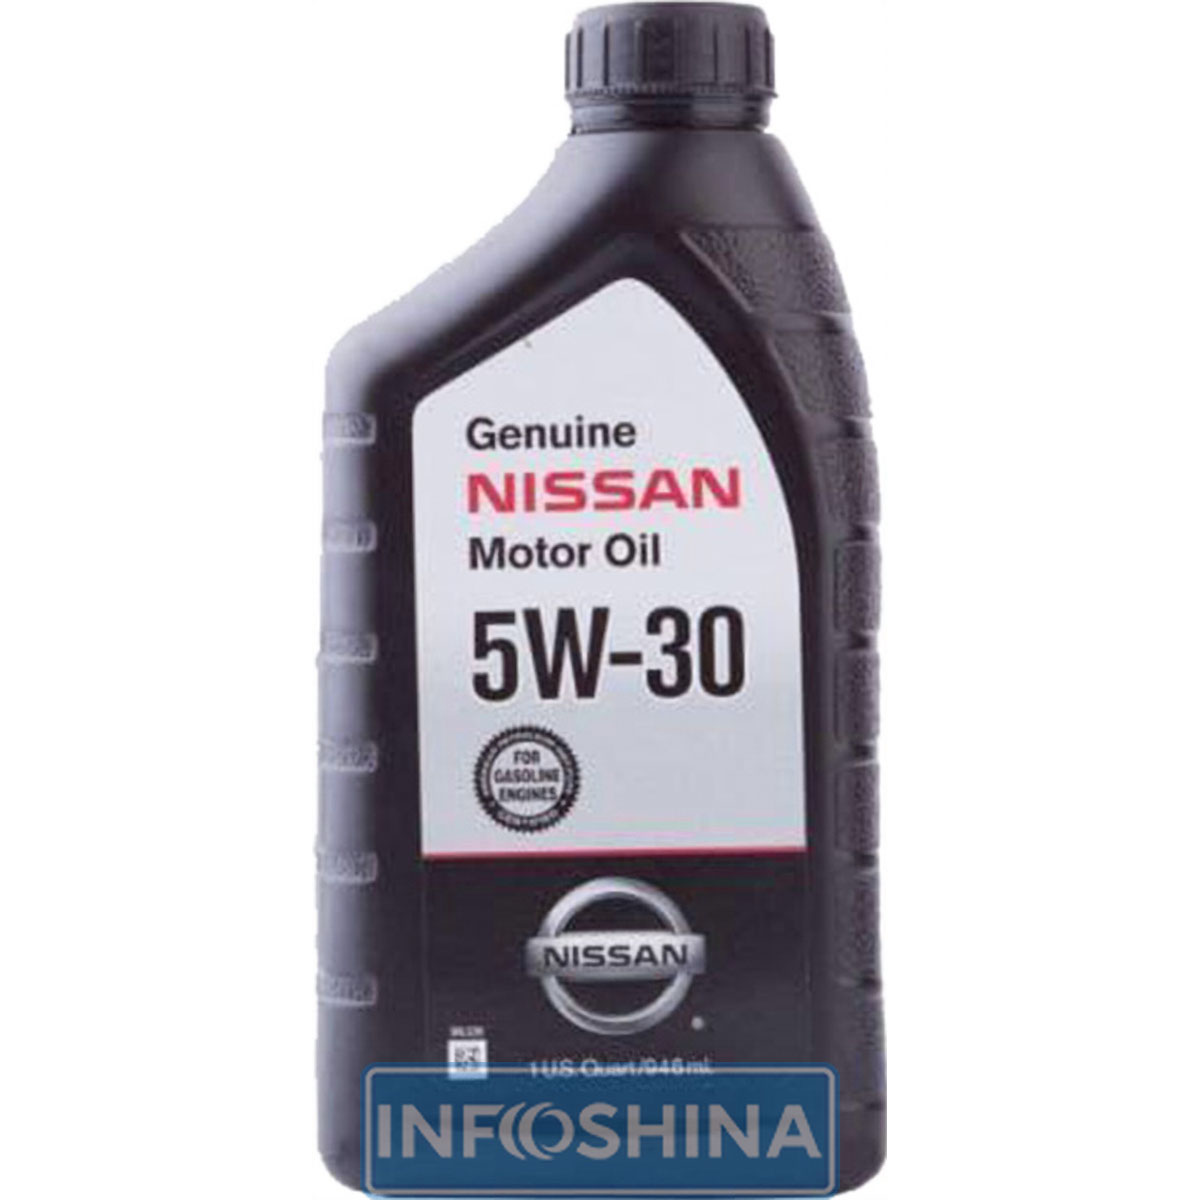 Купить масло Nissan Genuine Motor Oil